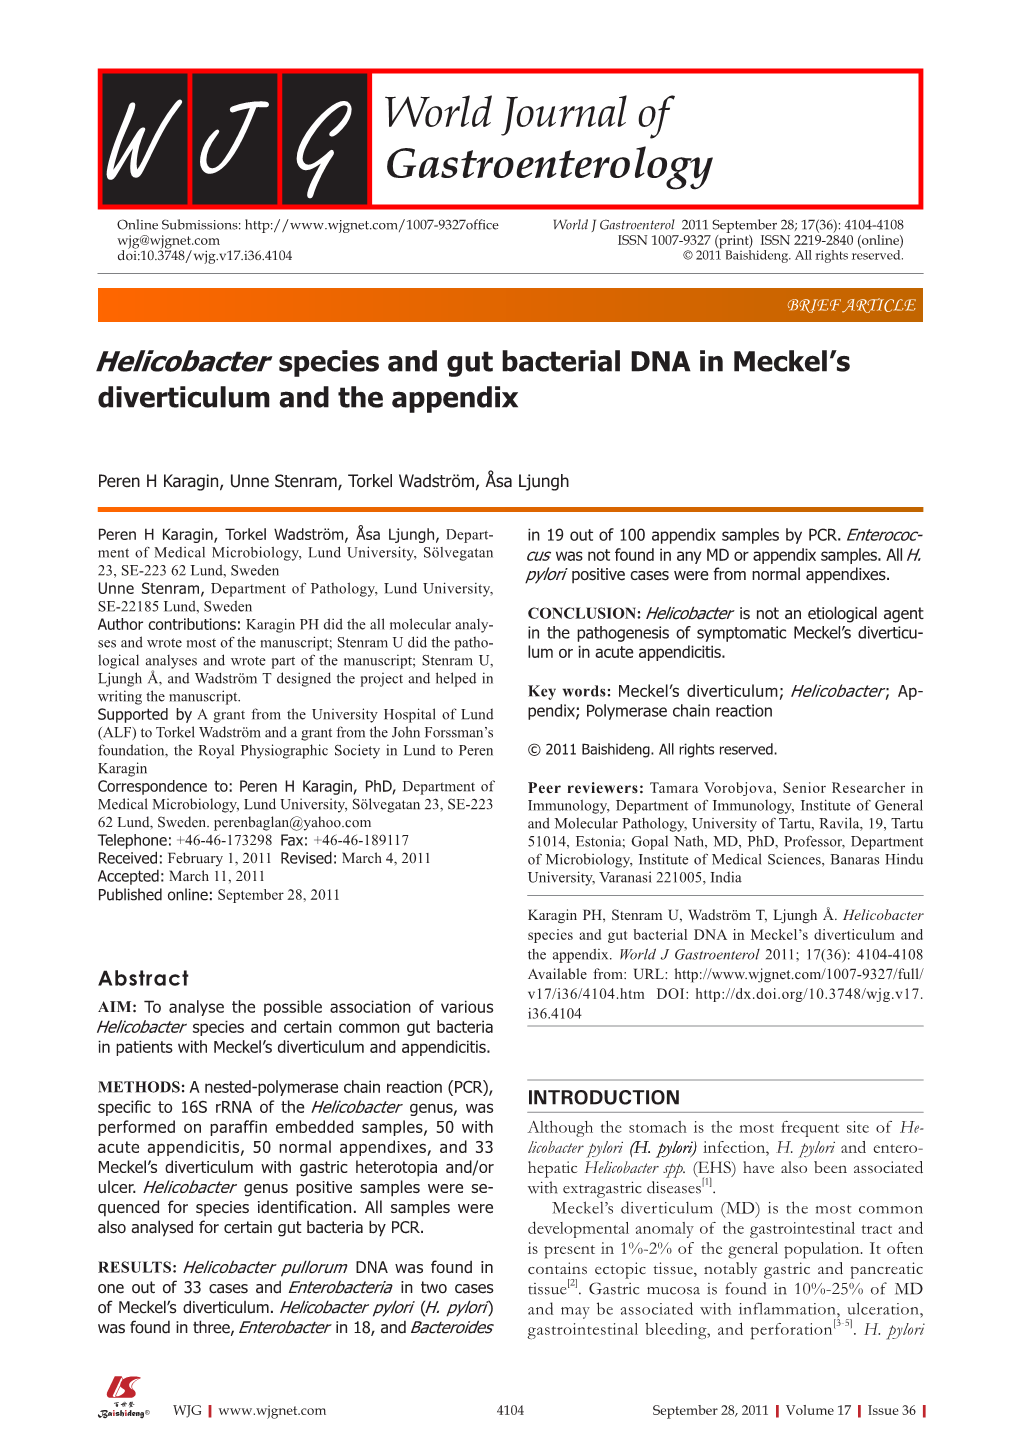 Helicobacter Species and Gut Bacterial DNA in Meckel's Diverticulum And